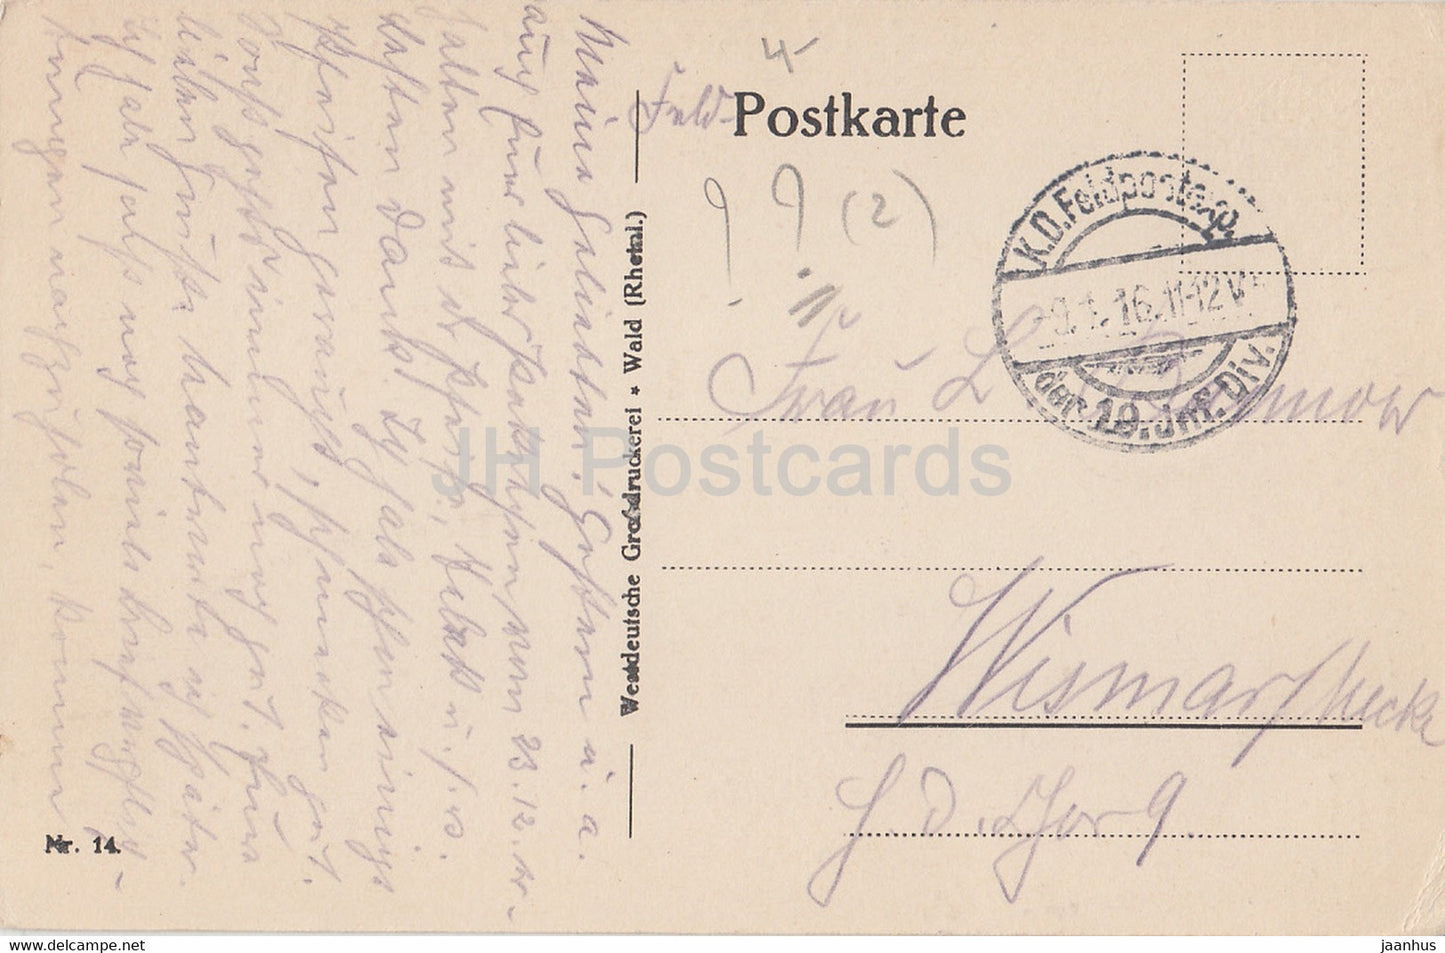 St. Thomas - Feldpost - 14 - alte Postkarte - 1916 - gebraucht